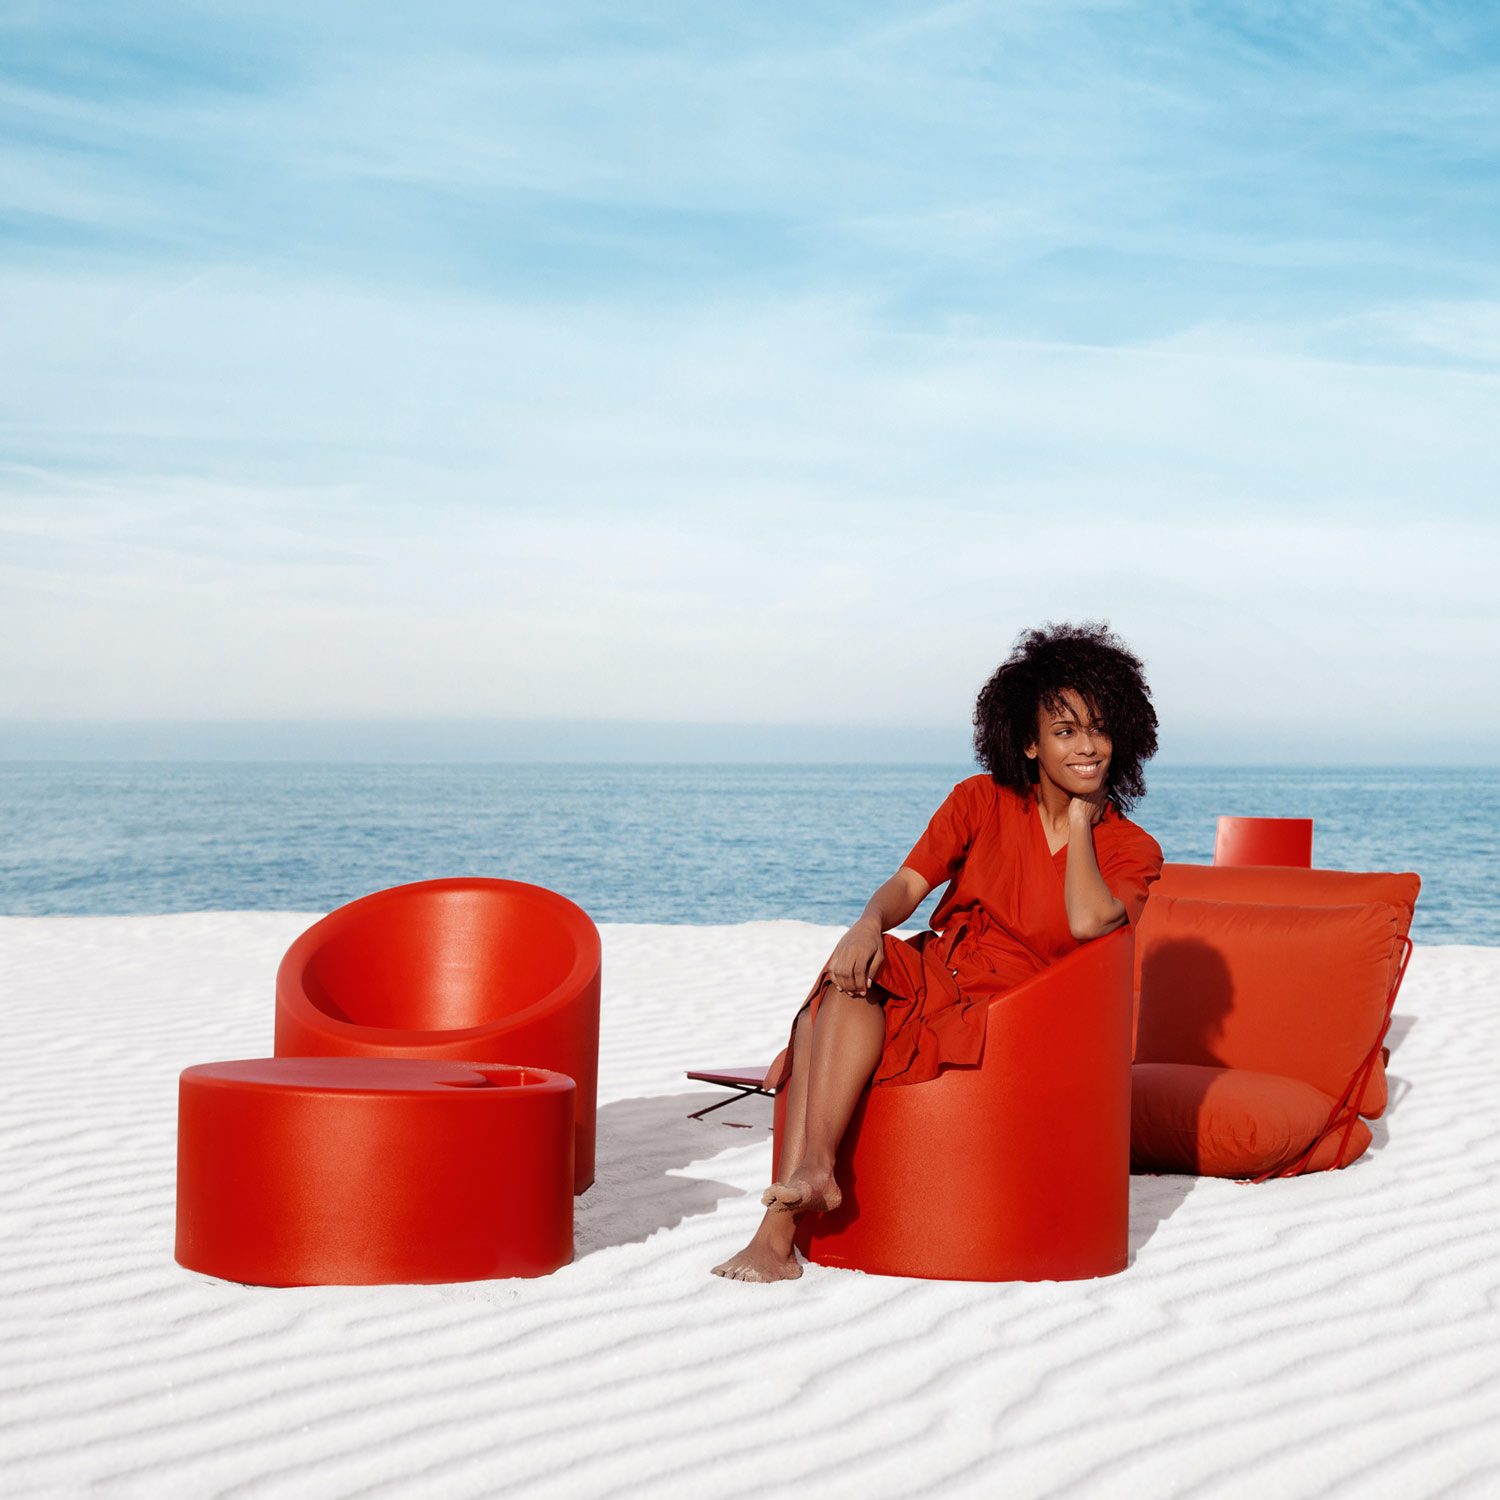 Altanmøbler fra Lipstick passer også til både strand og have fra Gitz Design